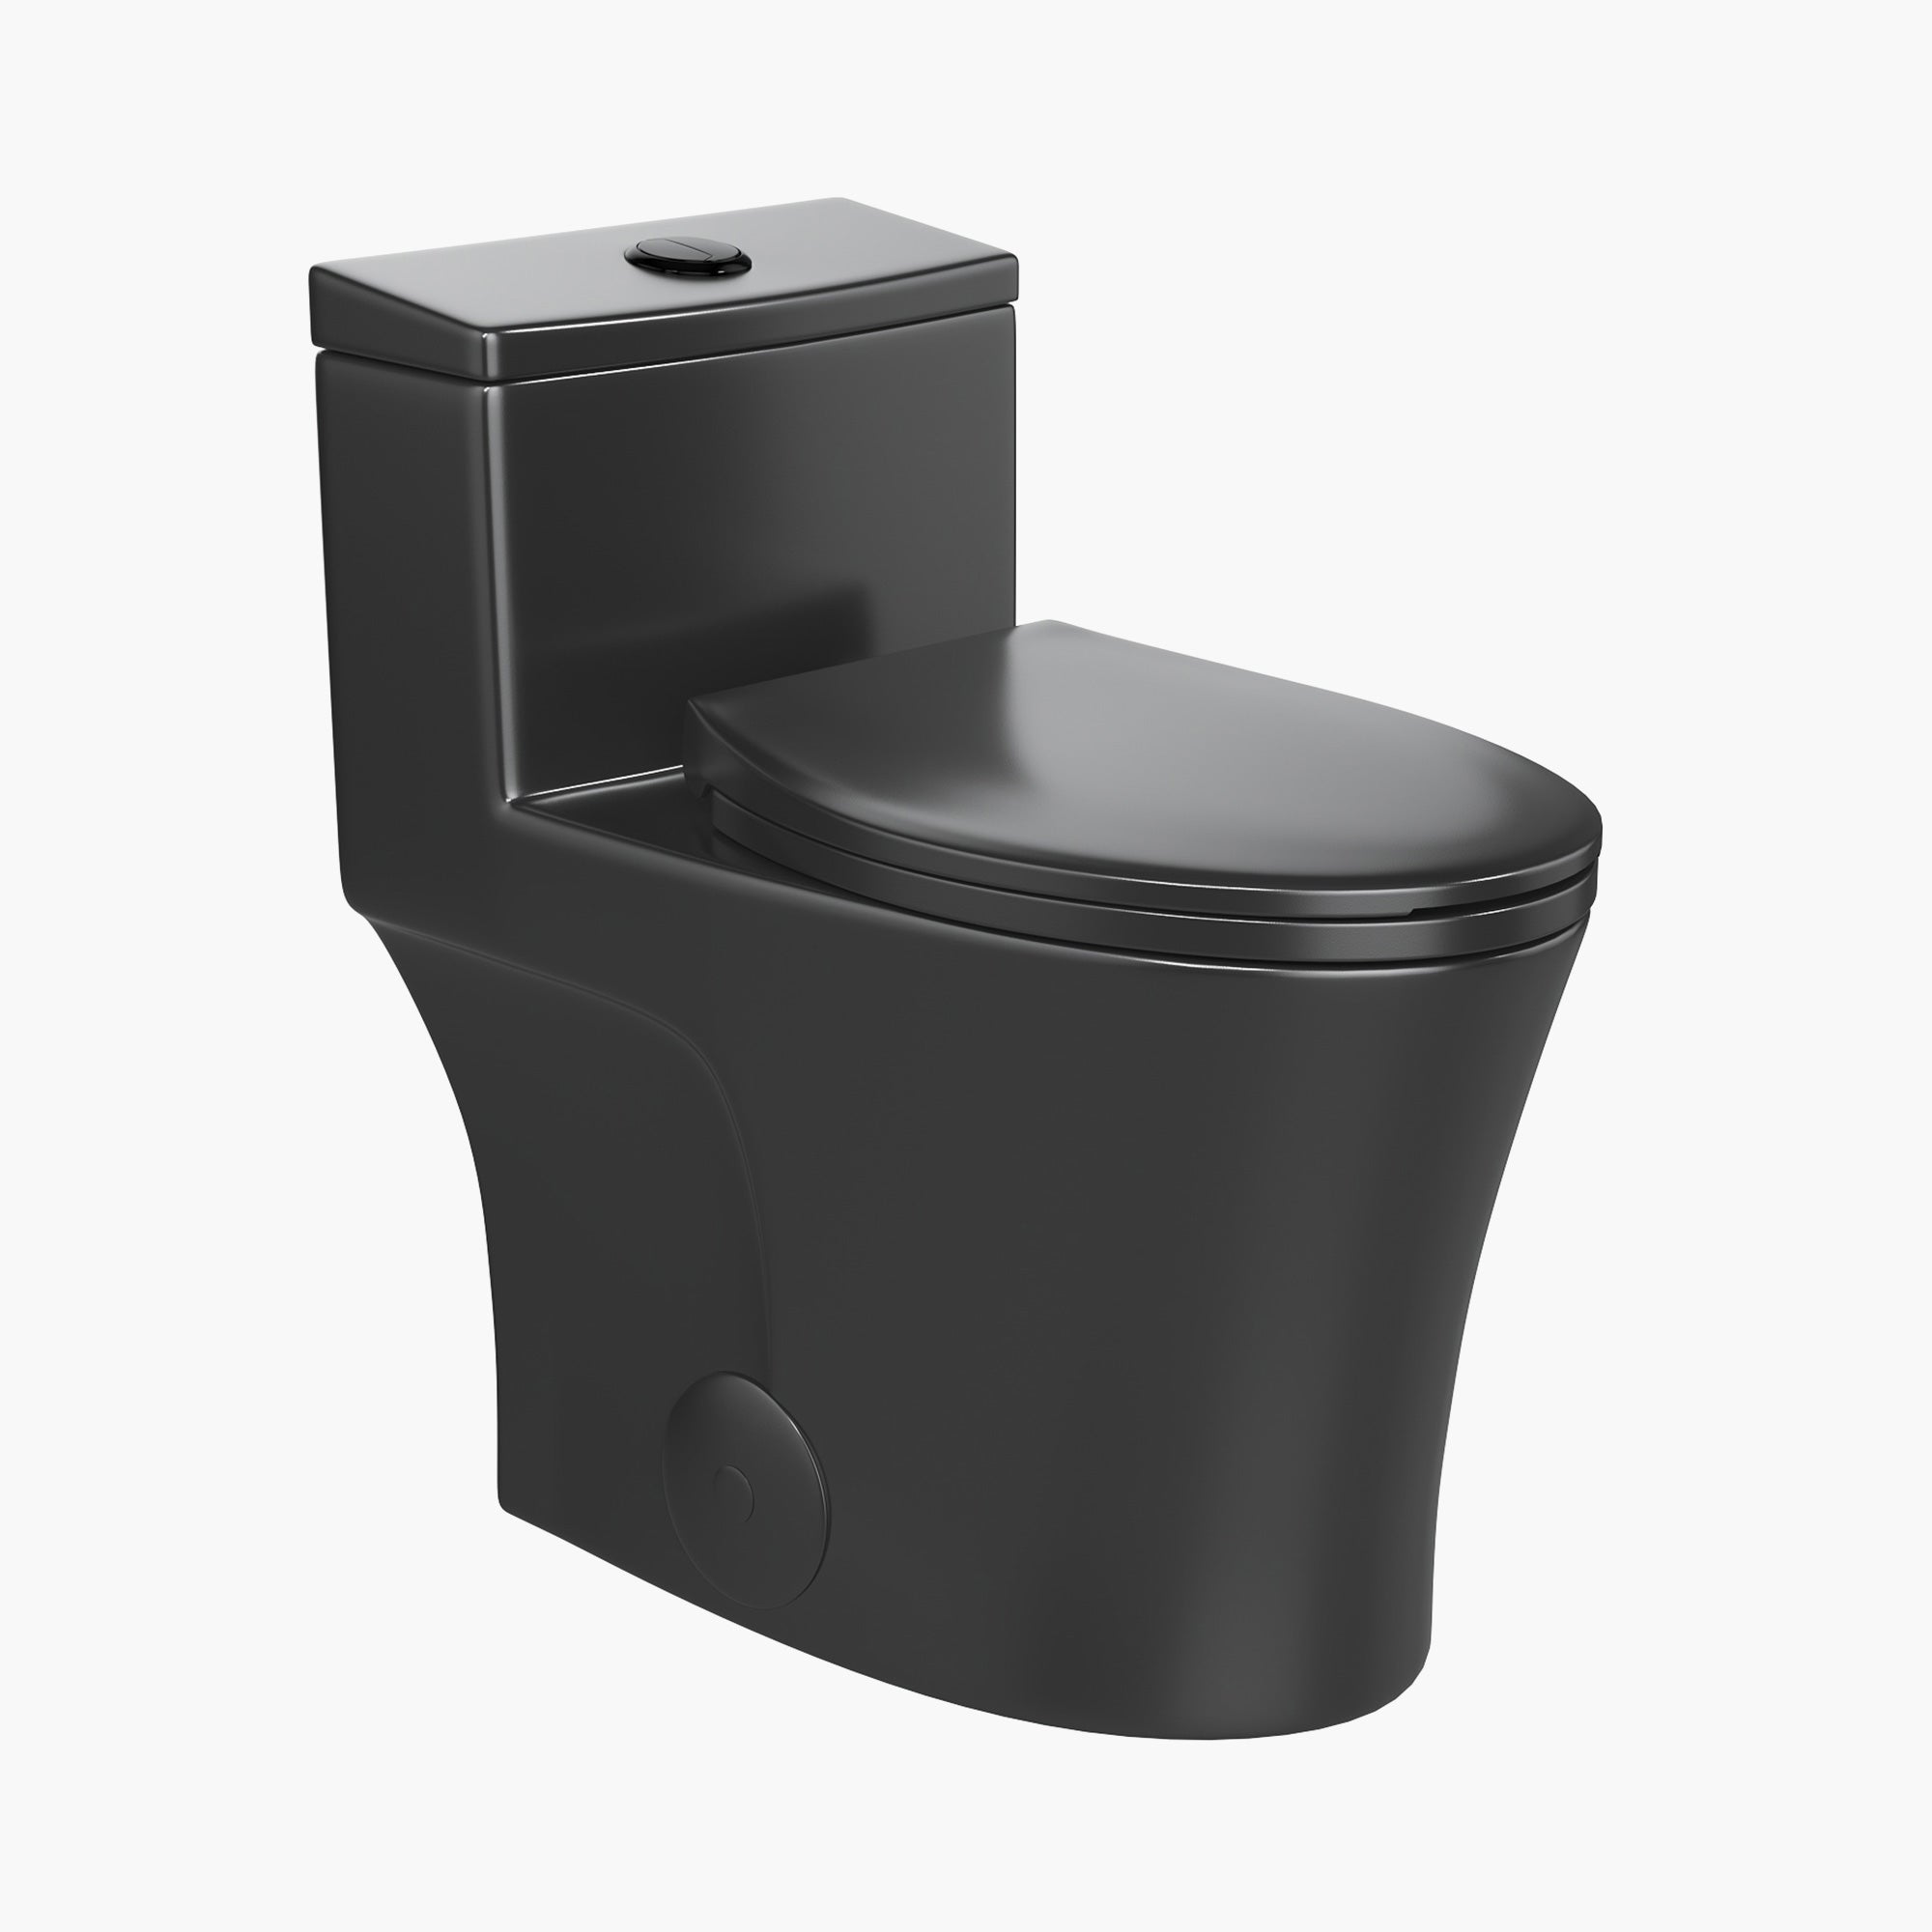 HOROW Black Ceramic Toilet 1.28 GPF Dual Flash Elongated One Piece Toilet Model T0338B